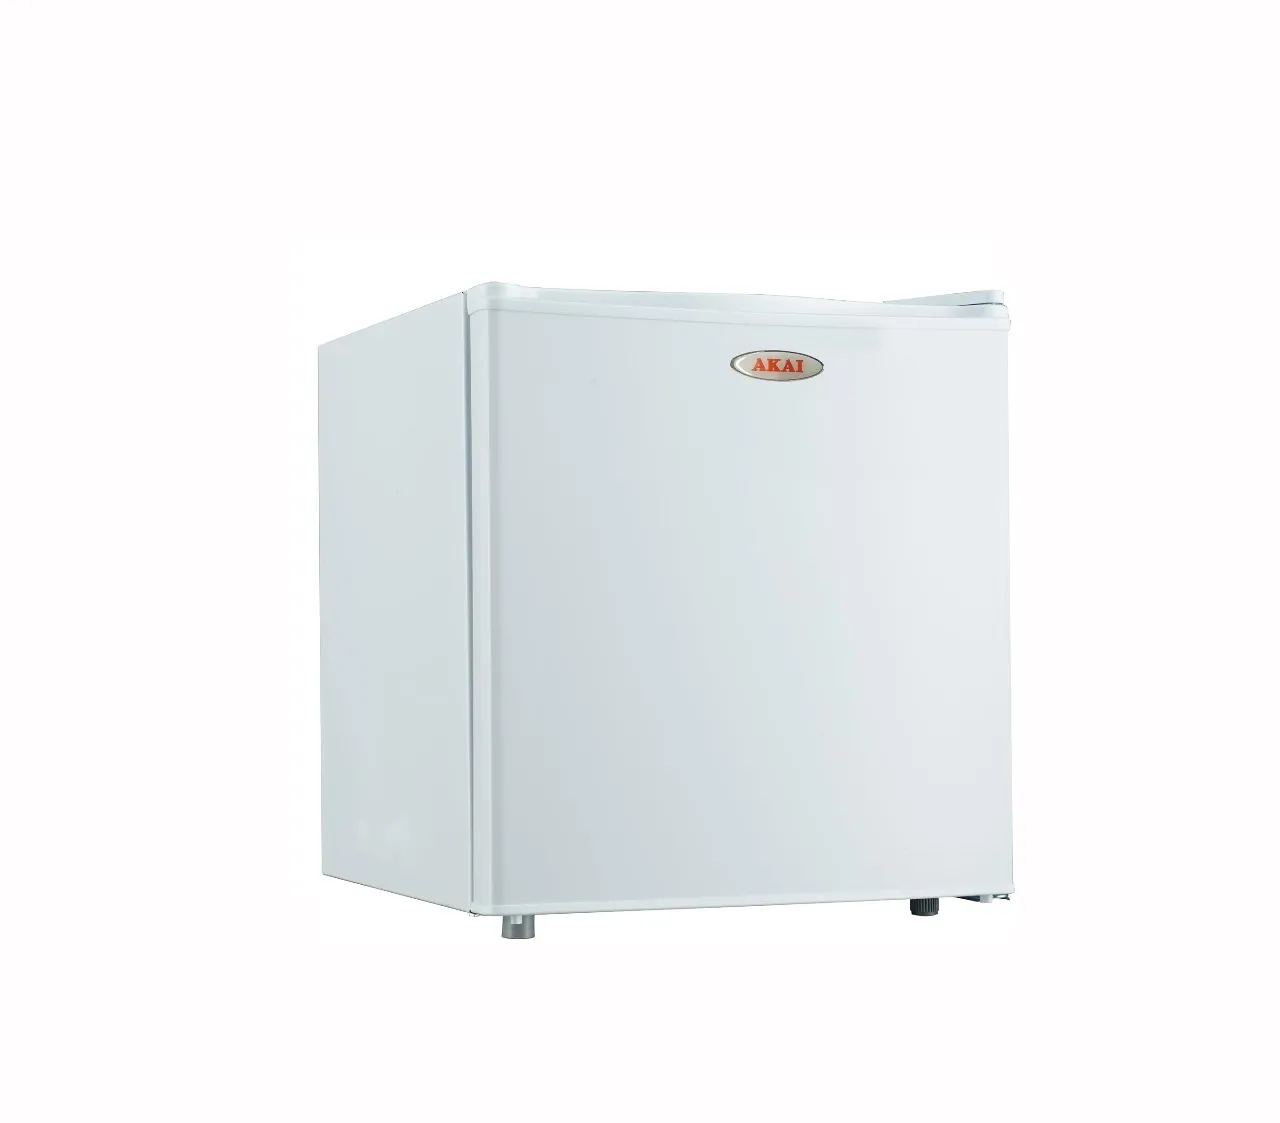 Akai 60 Liter Single Door Refrigerator Color White Model – RFMA-K60DW6 – Year Full 5 Year Compressor Warranty.